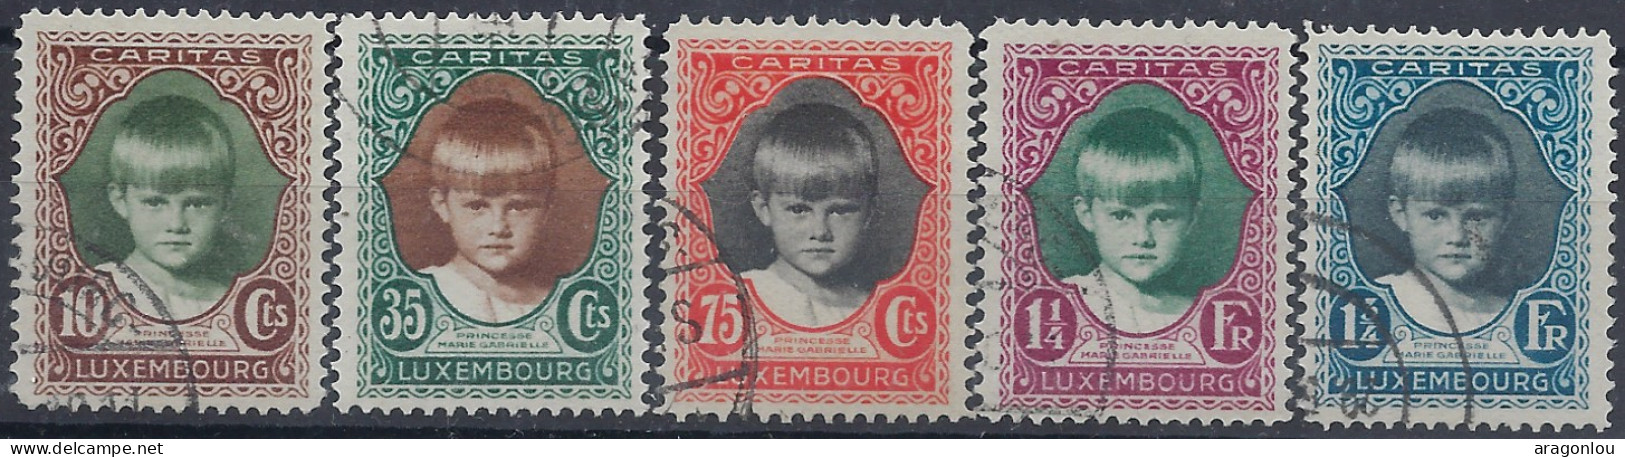 Luxembourg - Luxemburg - Timbres - 1929   Caritas   Princesse Marie-Gabrielle   Série   ° - Blocs & Hojas